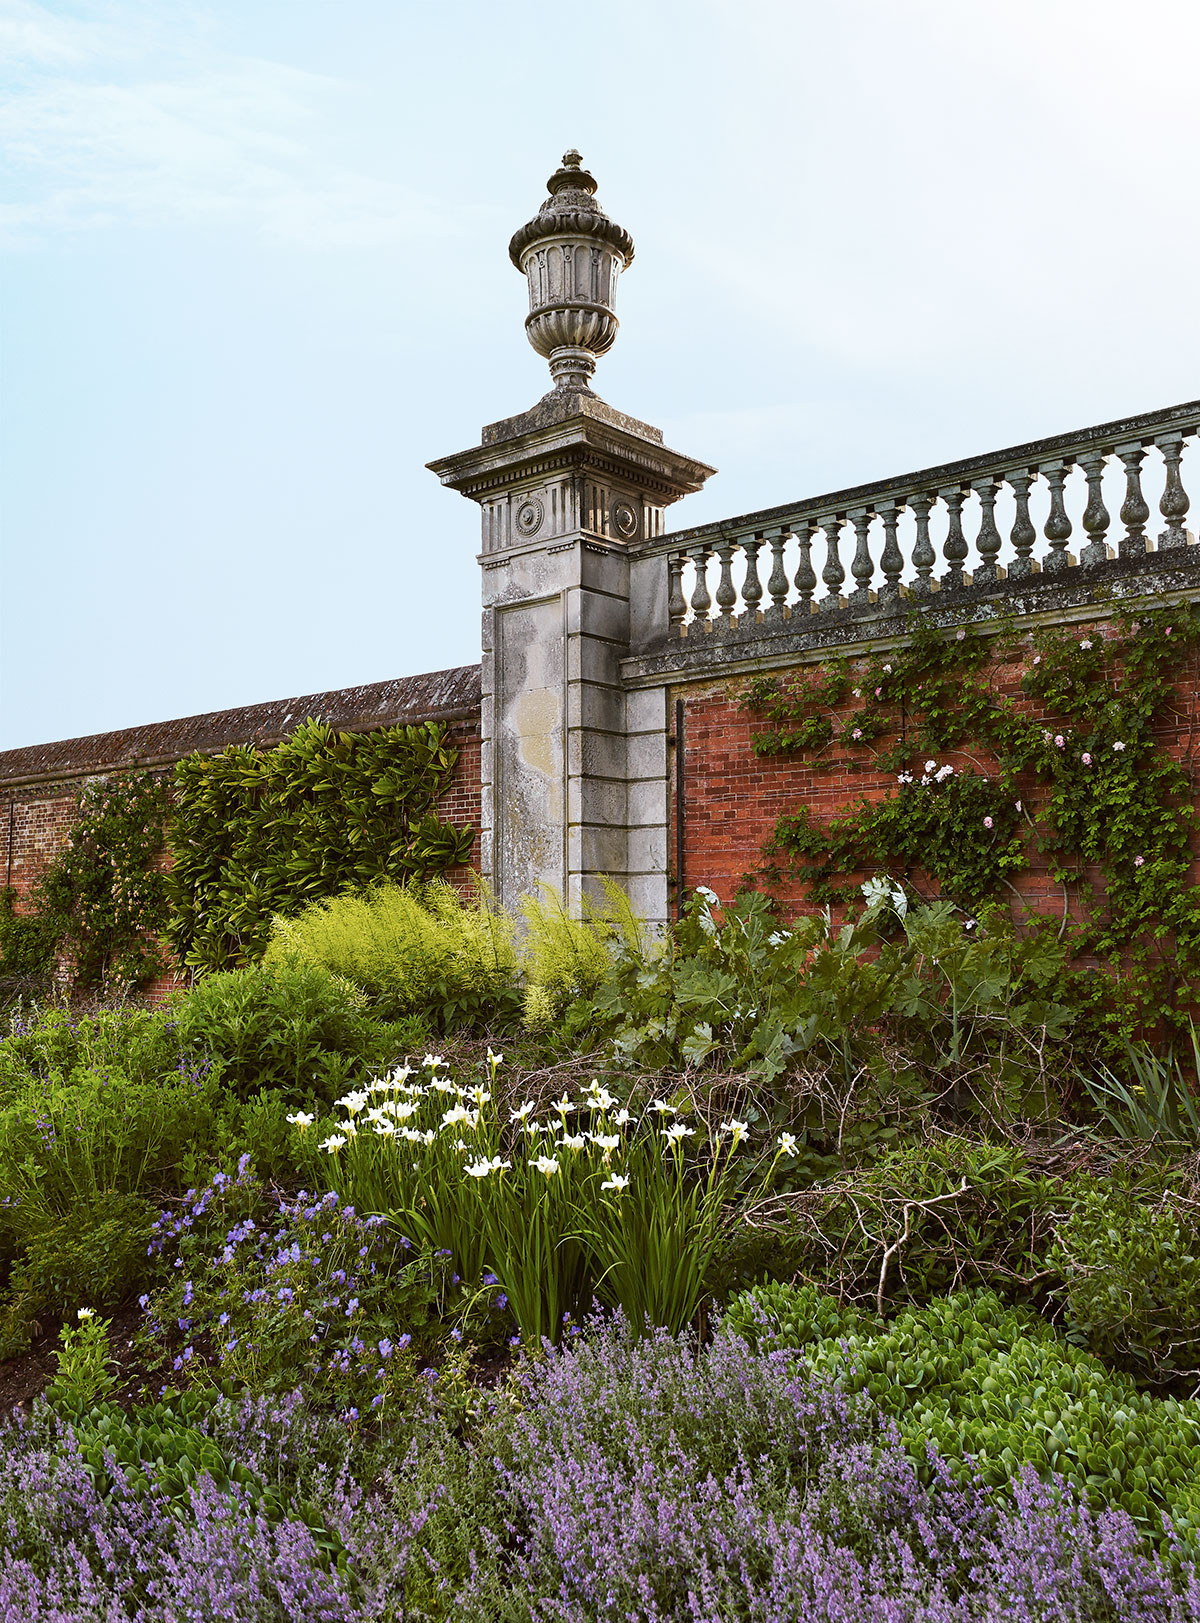 Walled garden at Cliveden House, England